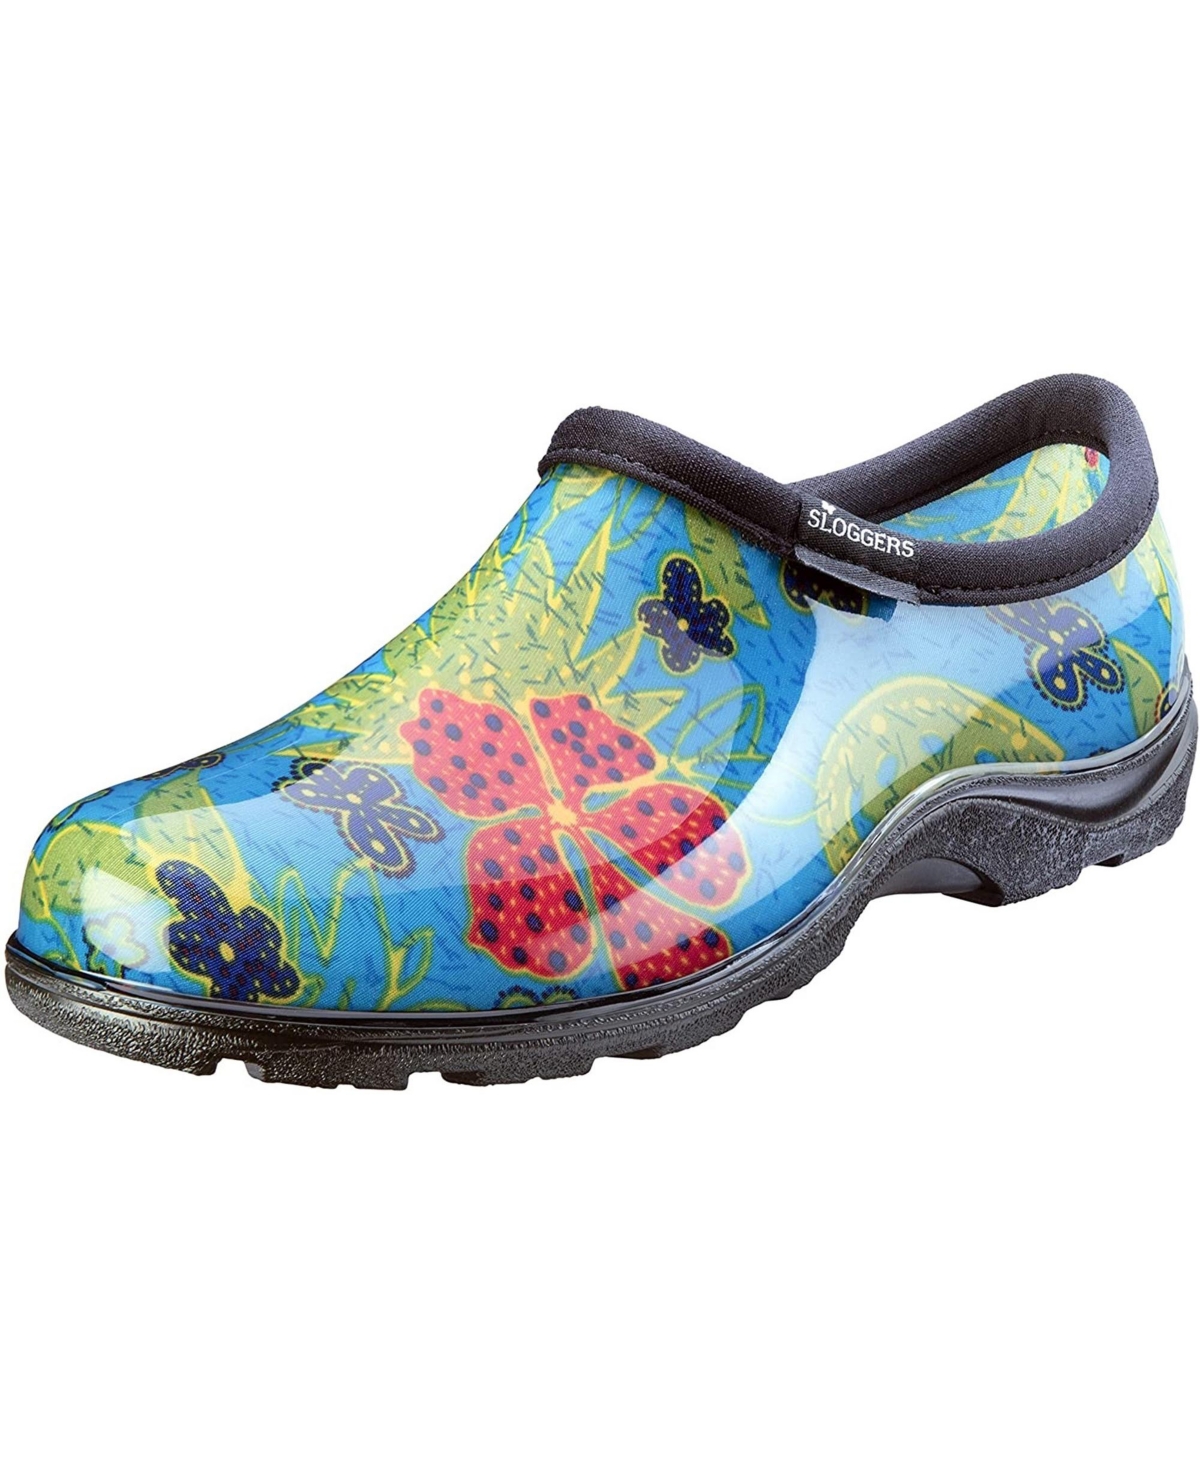 Womens Rain and Garden Shoes, Midsummer Blue Print, Size 10 - Multi